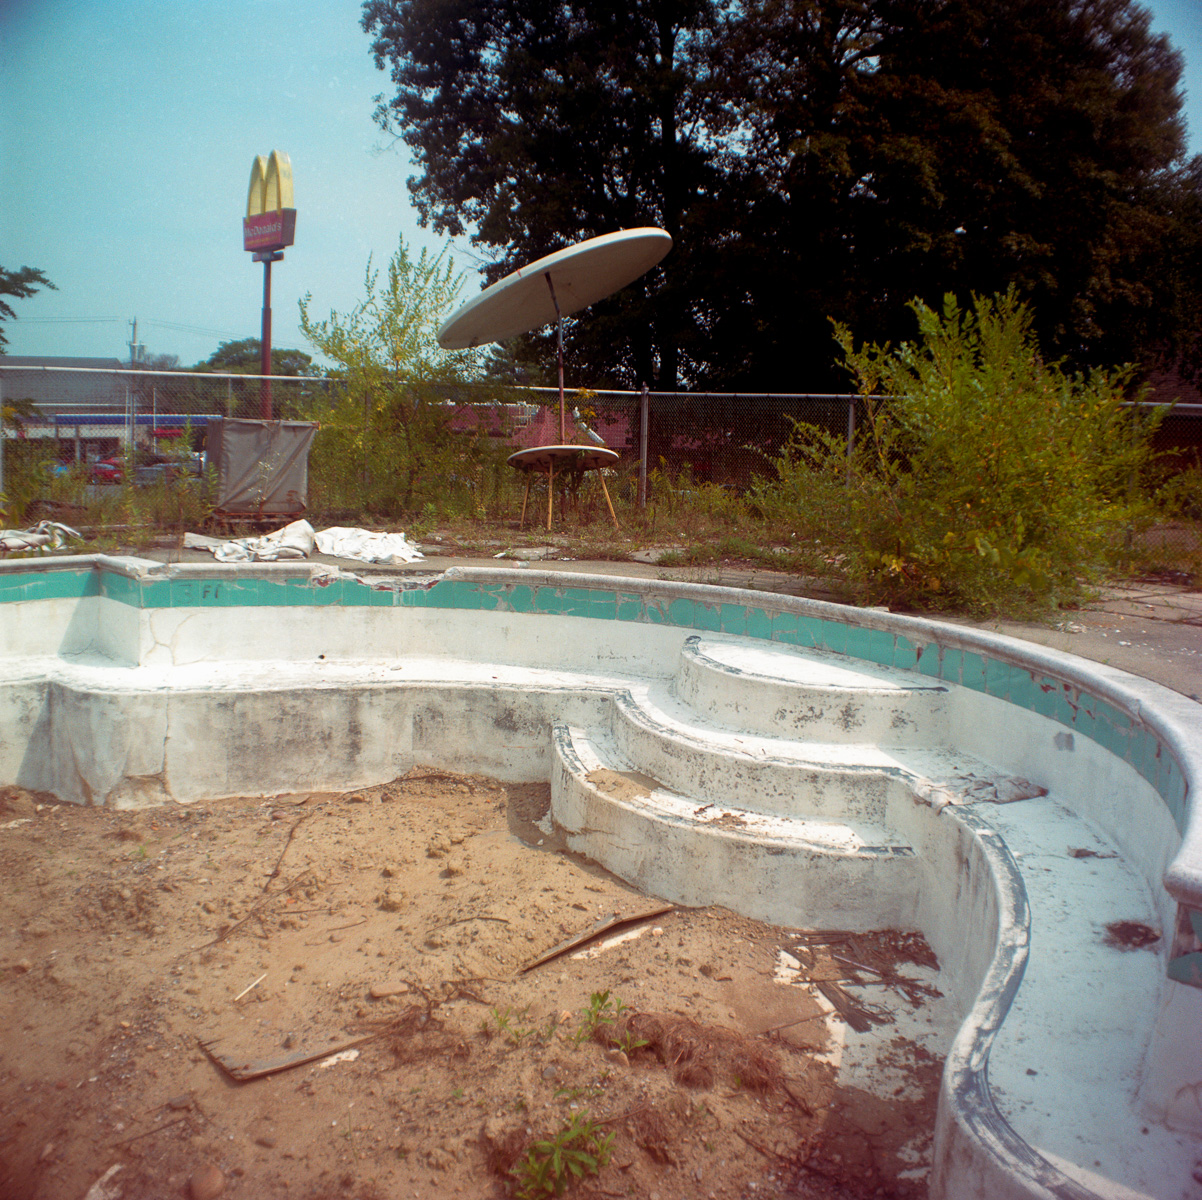 Abandoned pool and McDonalds